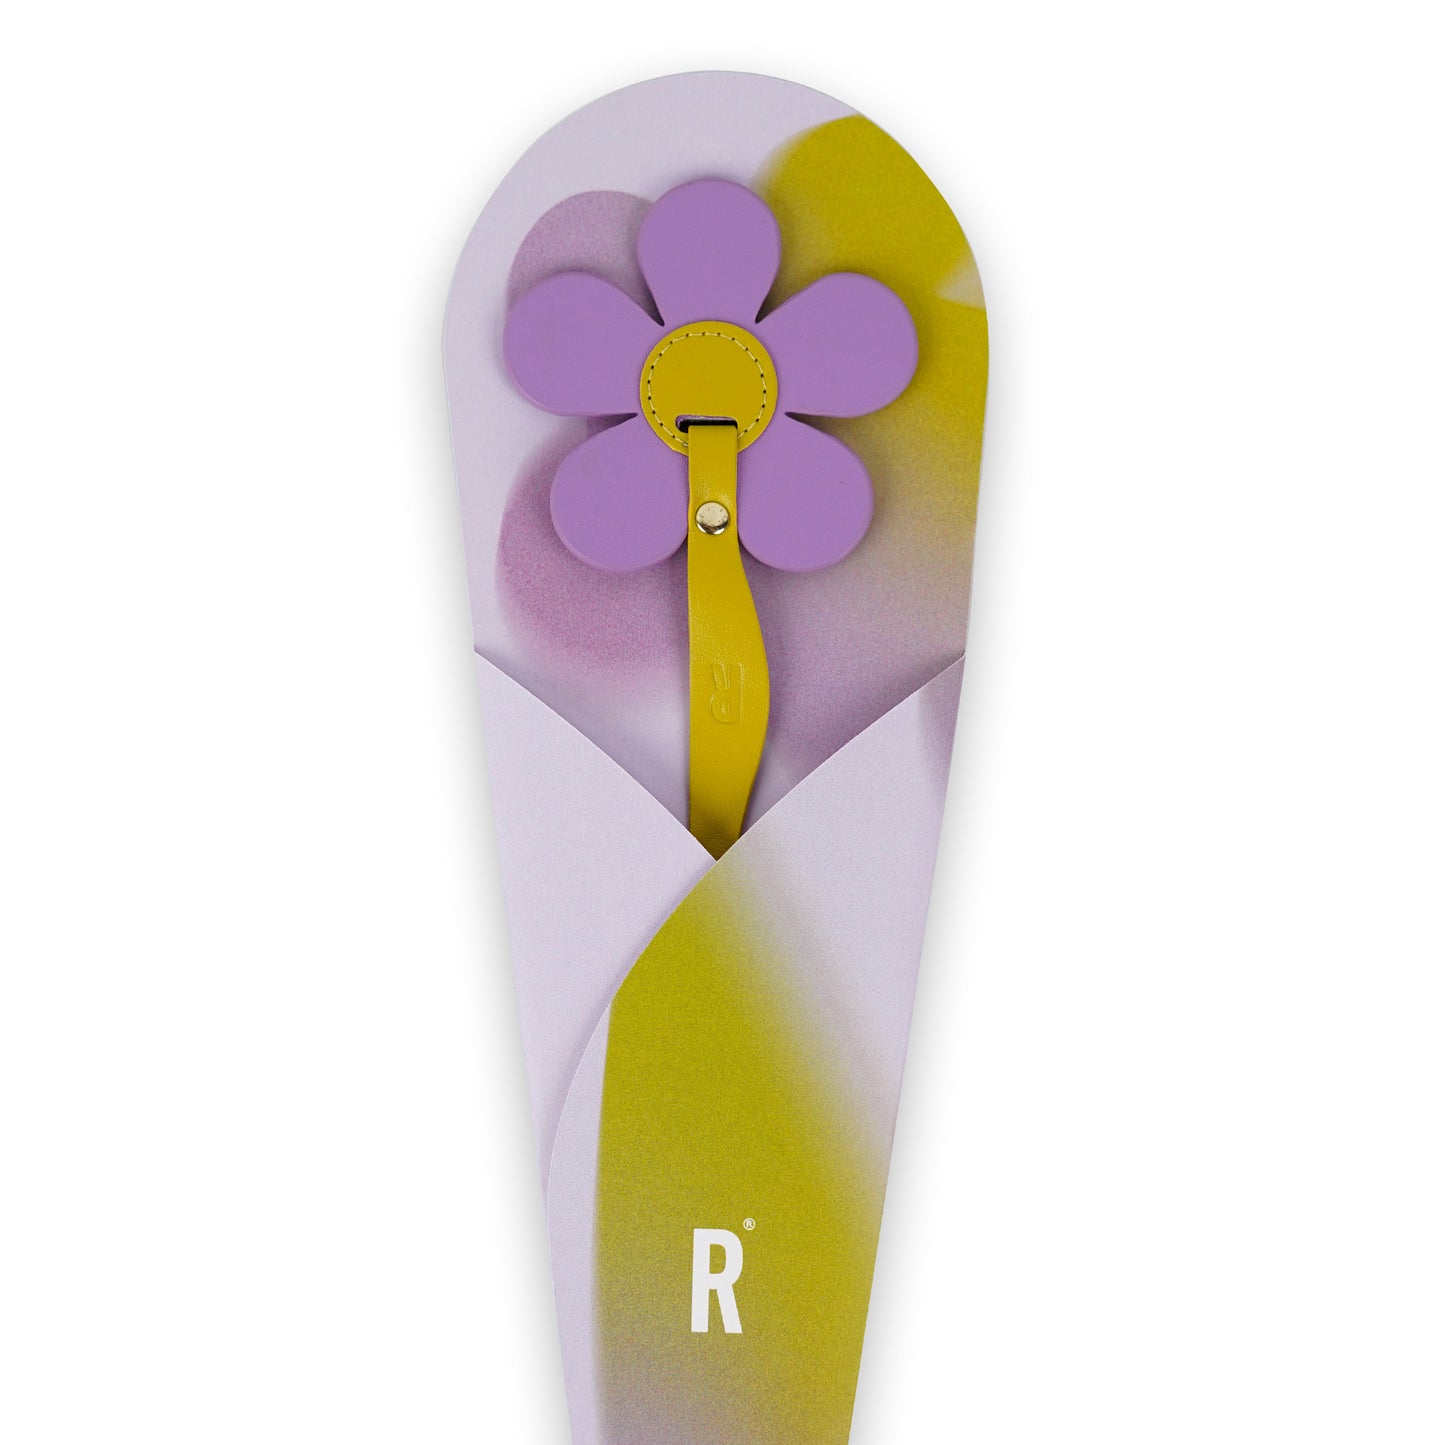 Flower Charm - Purple Daisy